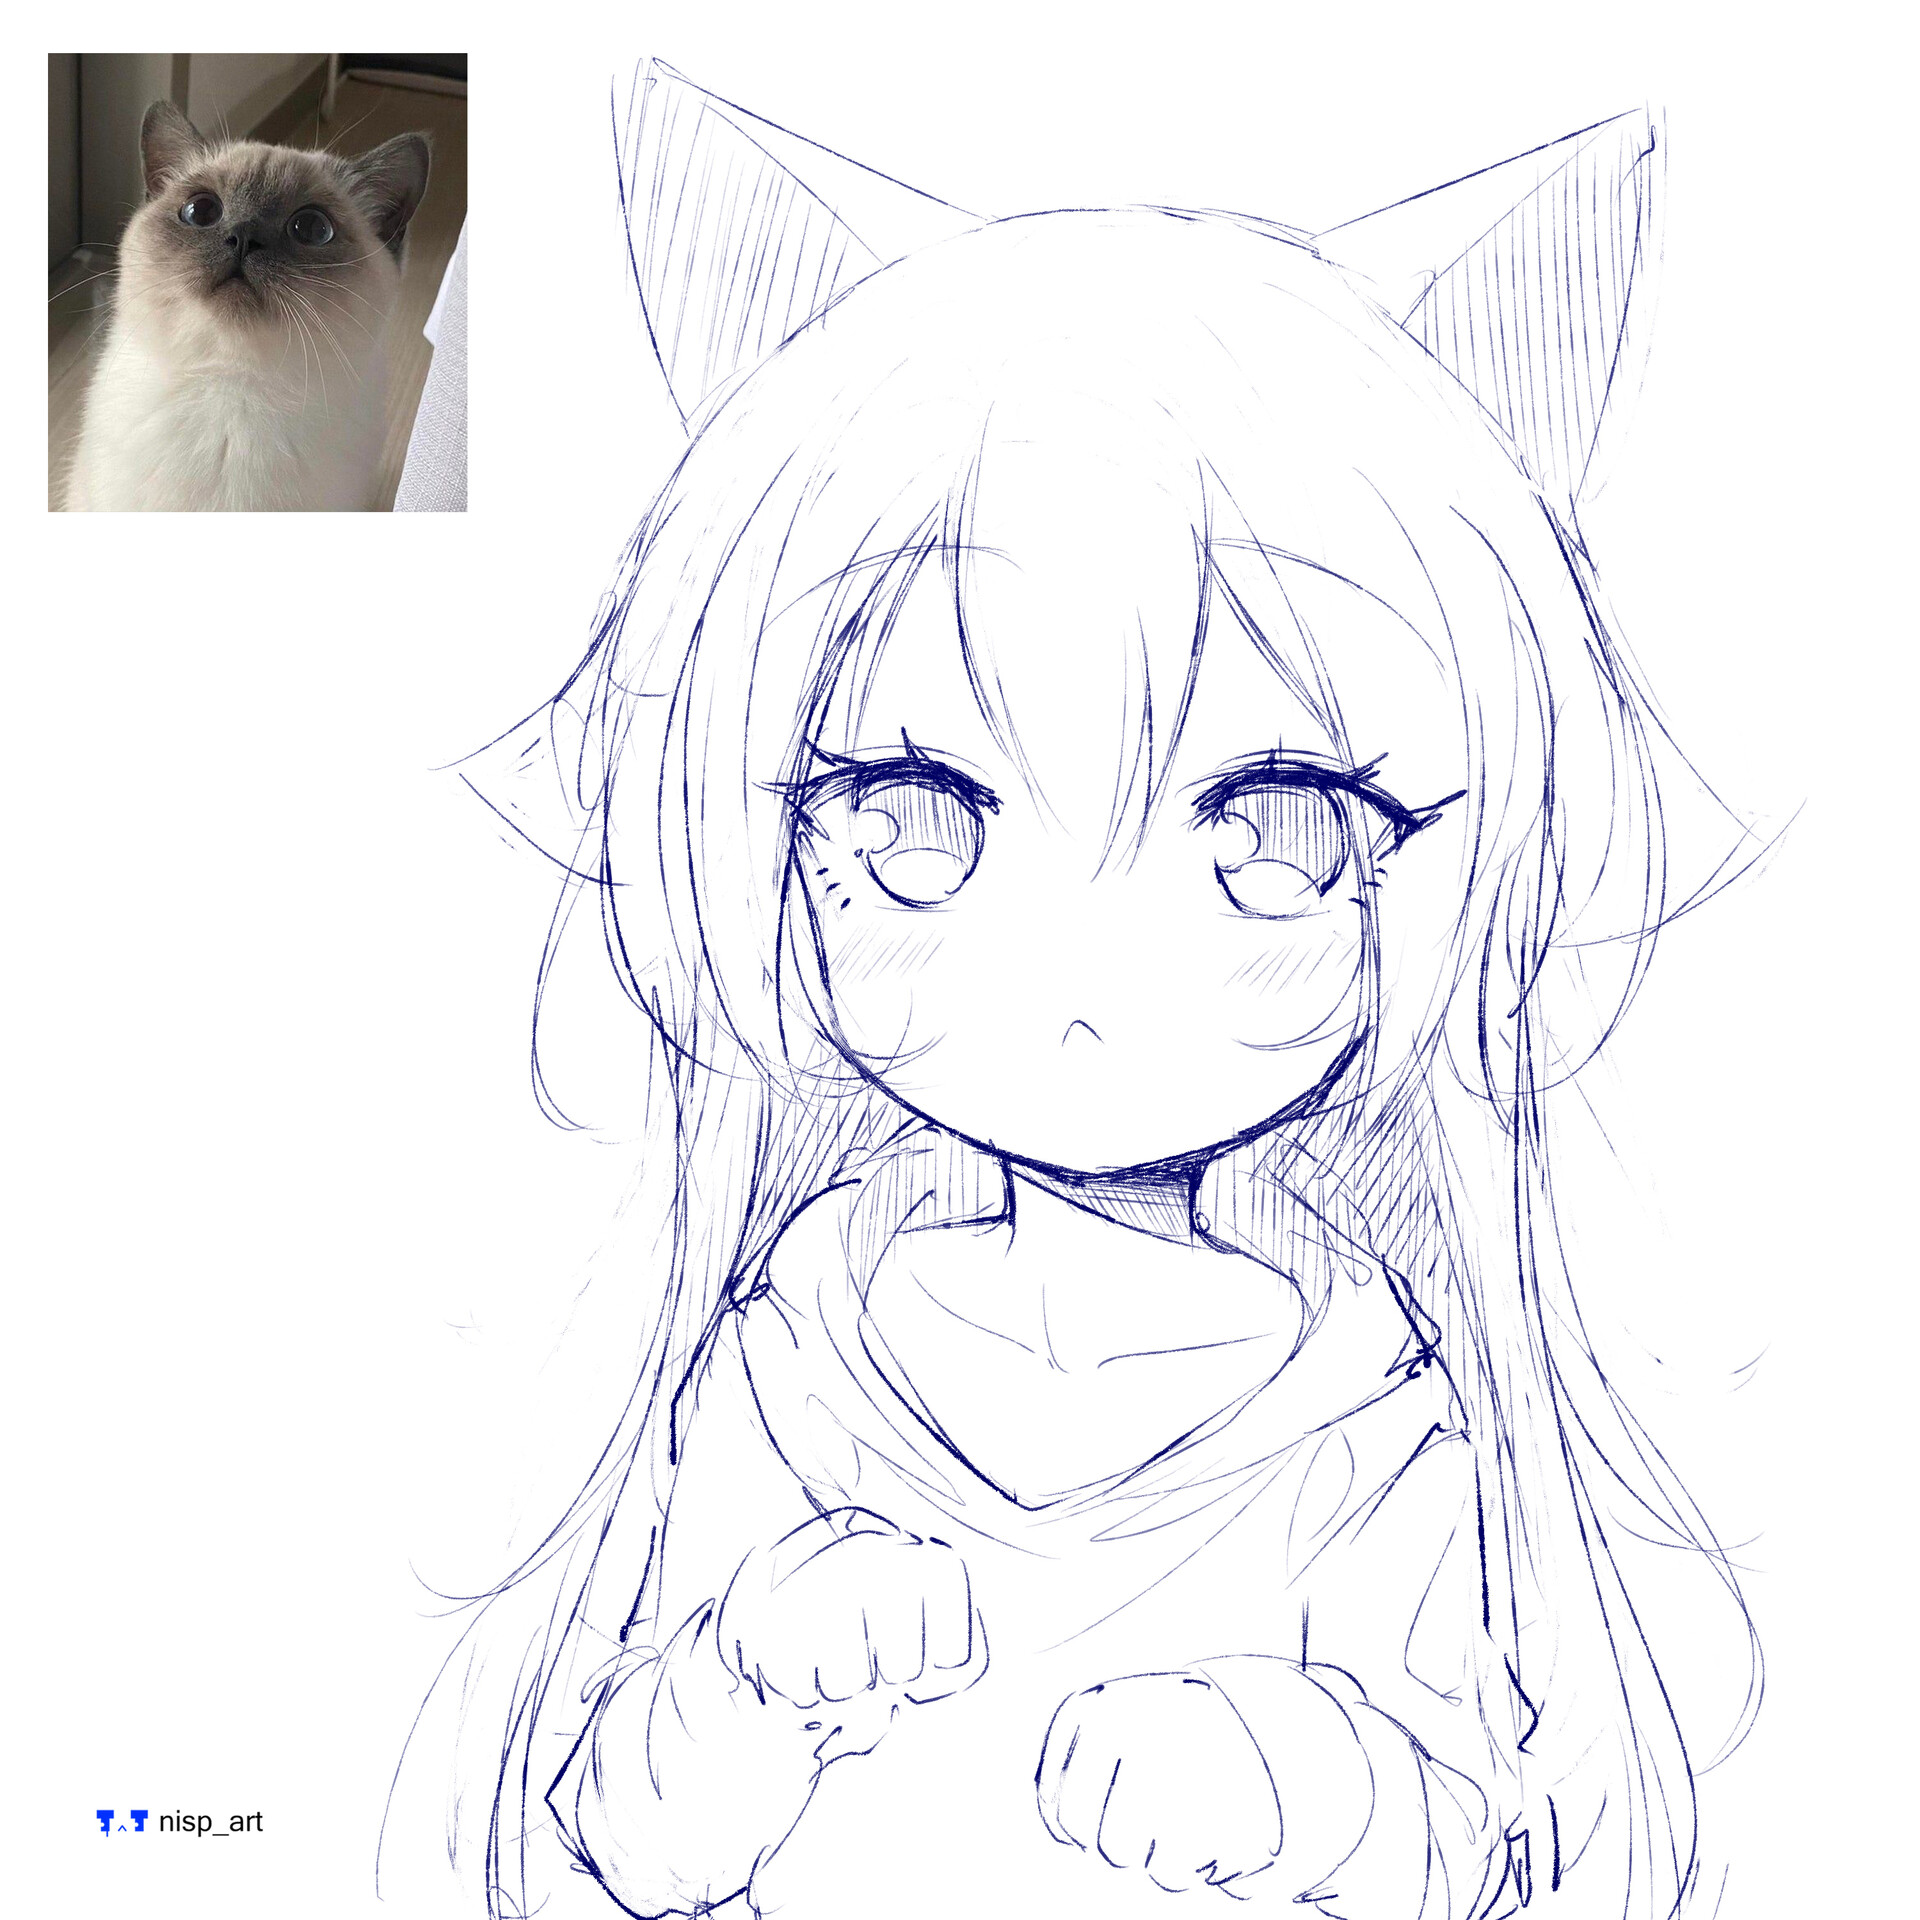 28 Anime cat ideas  anime cat cat art cat drawing